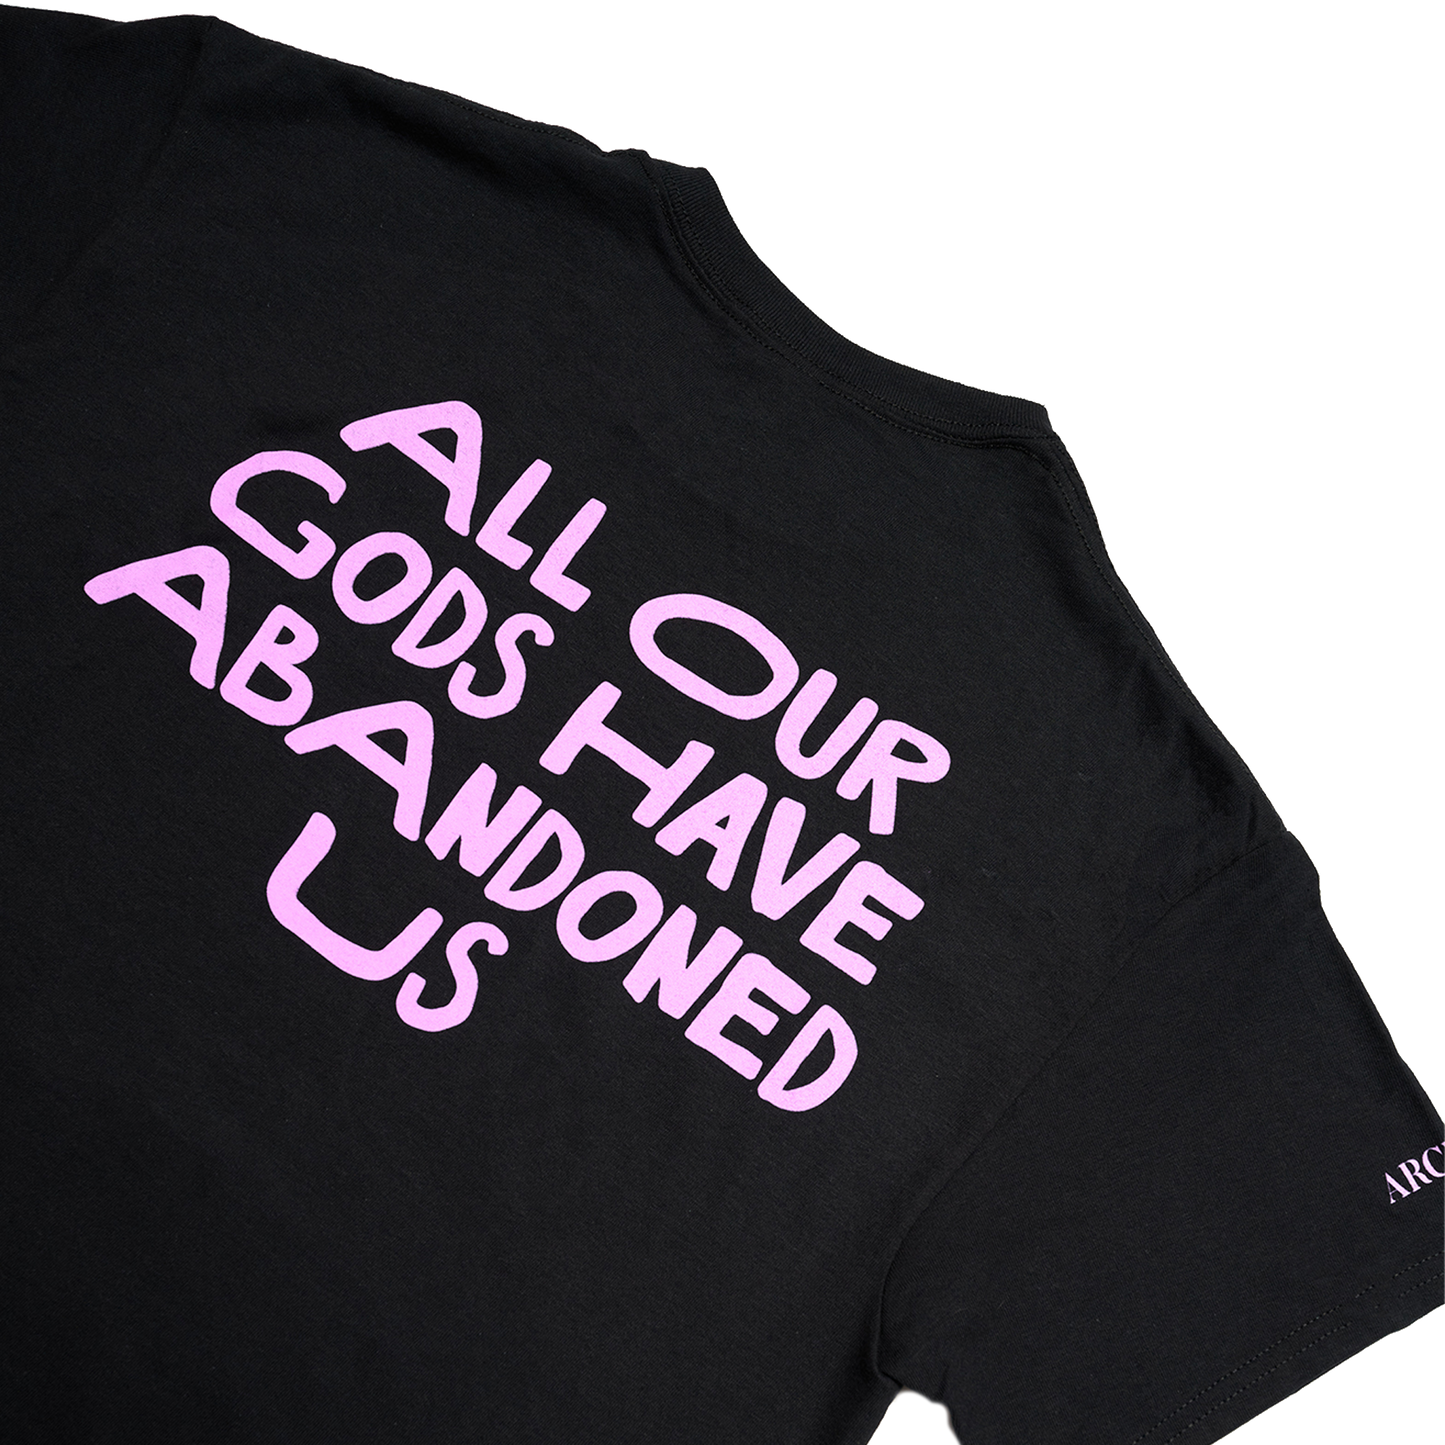 All Our Gods Have Abandoned Us Kids (Black) T-shirt